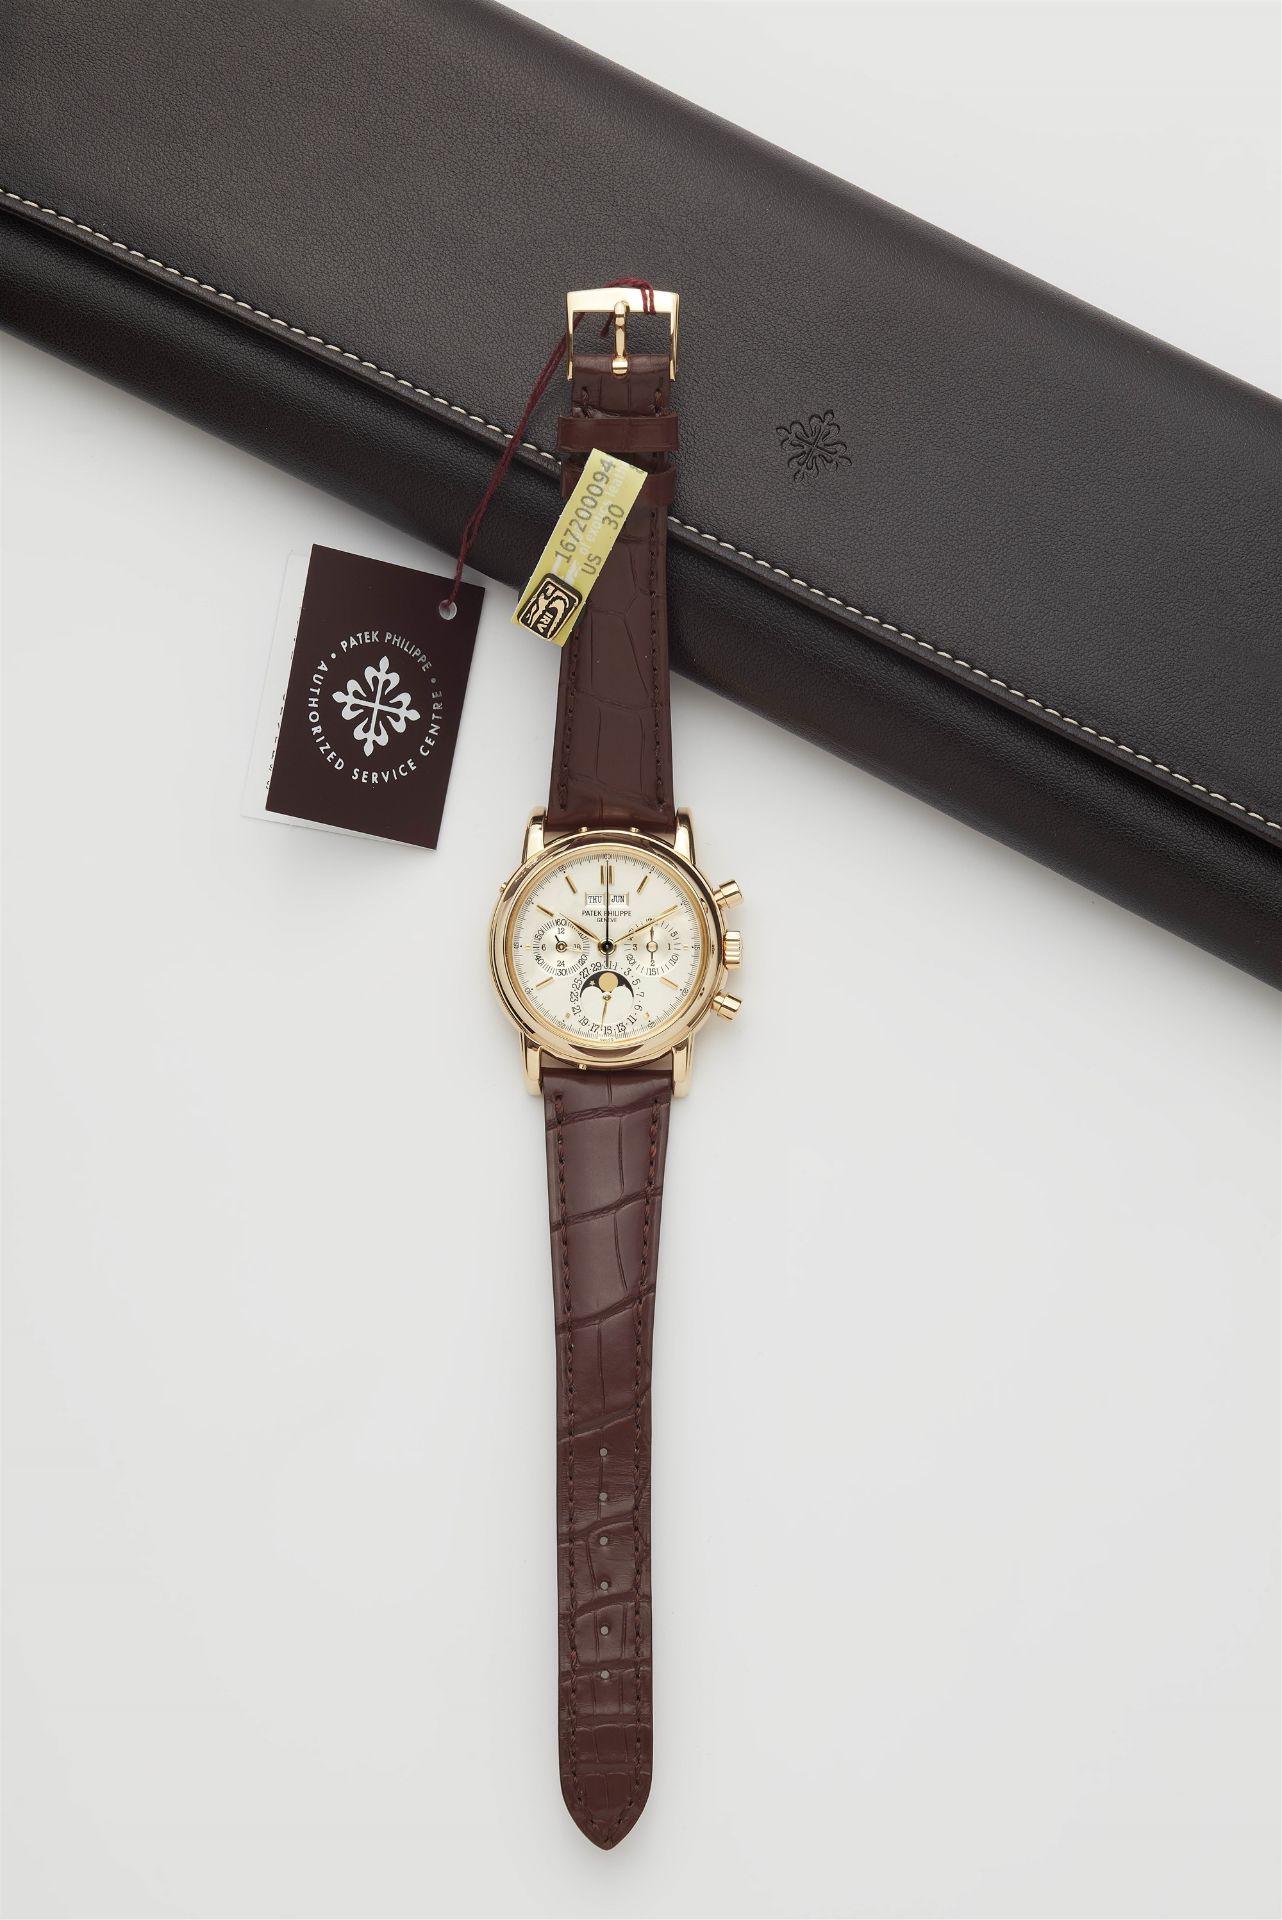 An extremely rare 18k Patek Philippe ref. 3971 gentelman's wristwatch. - Image 2 of 5